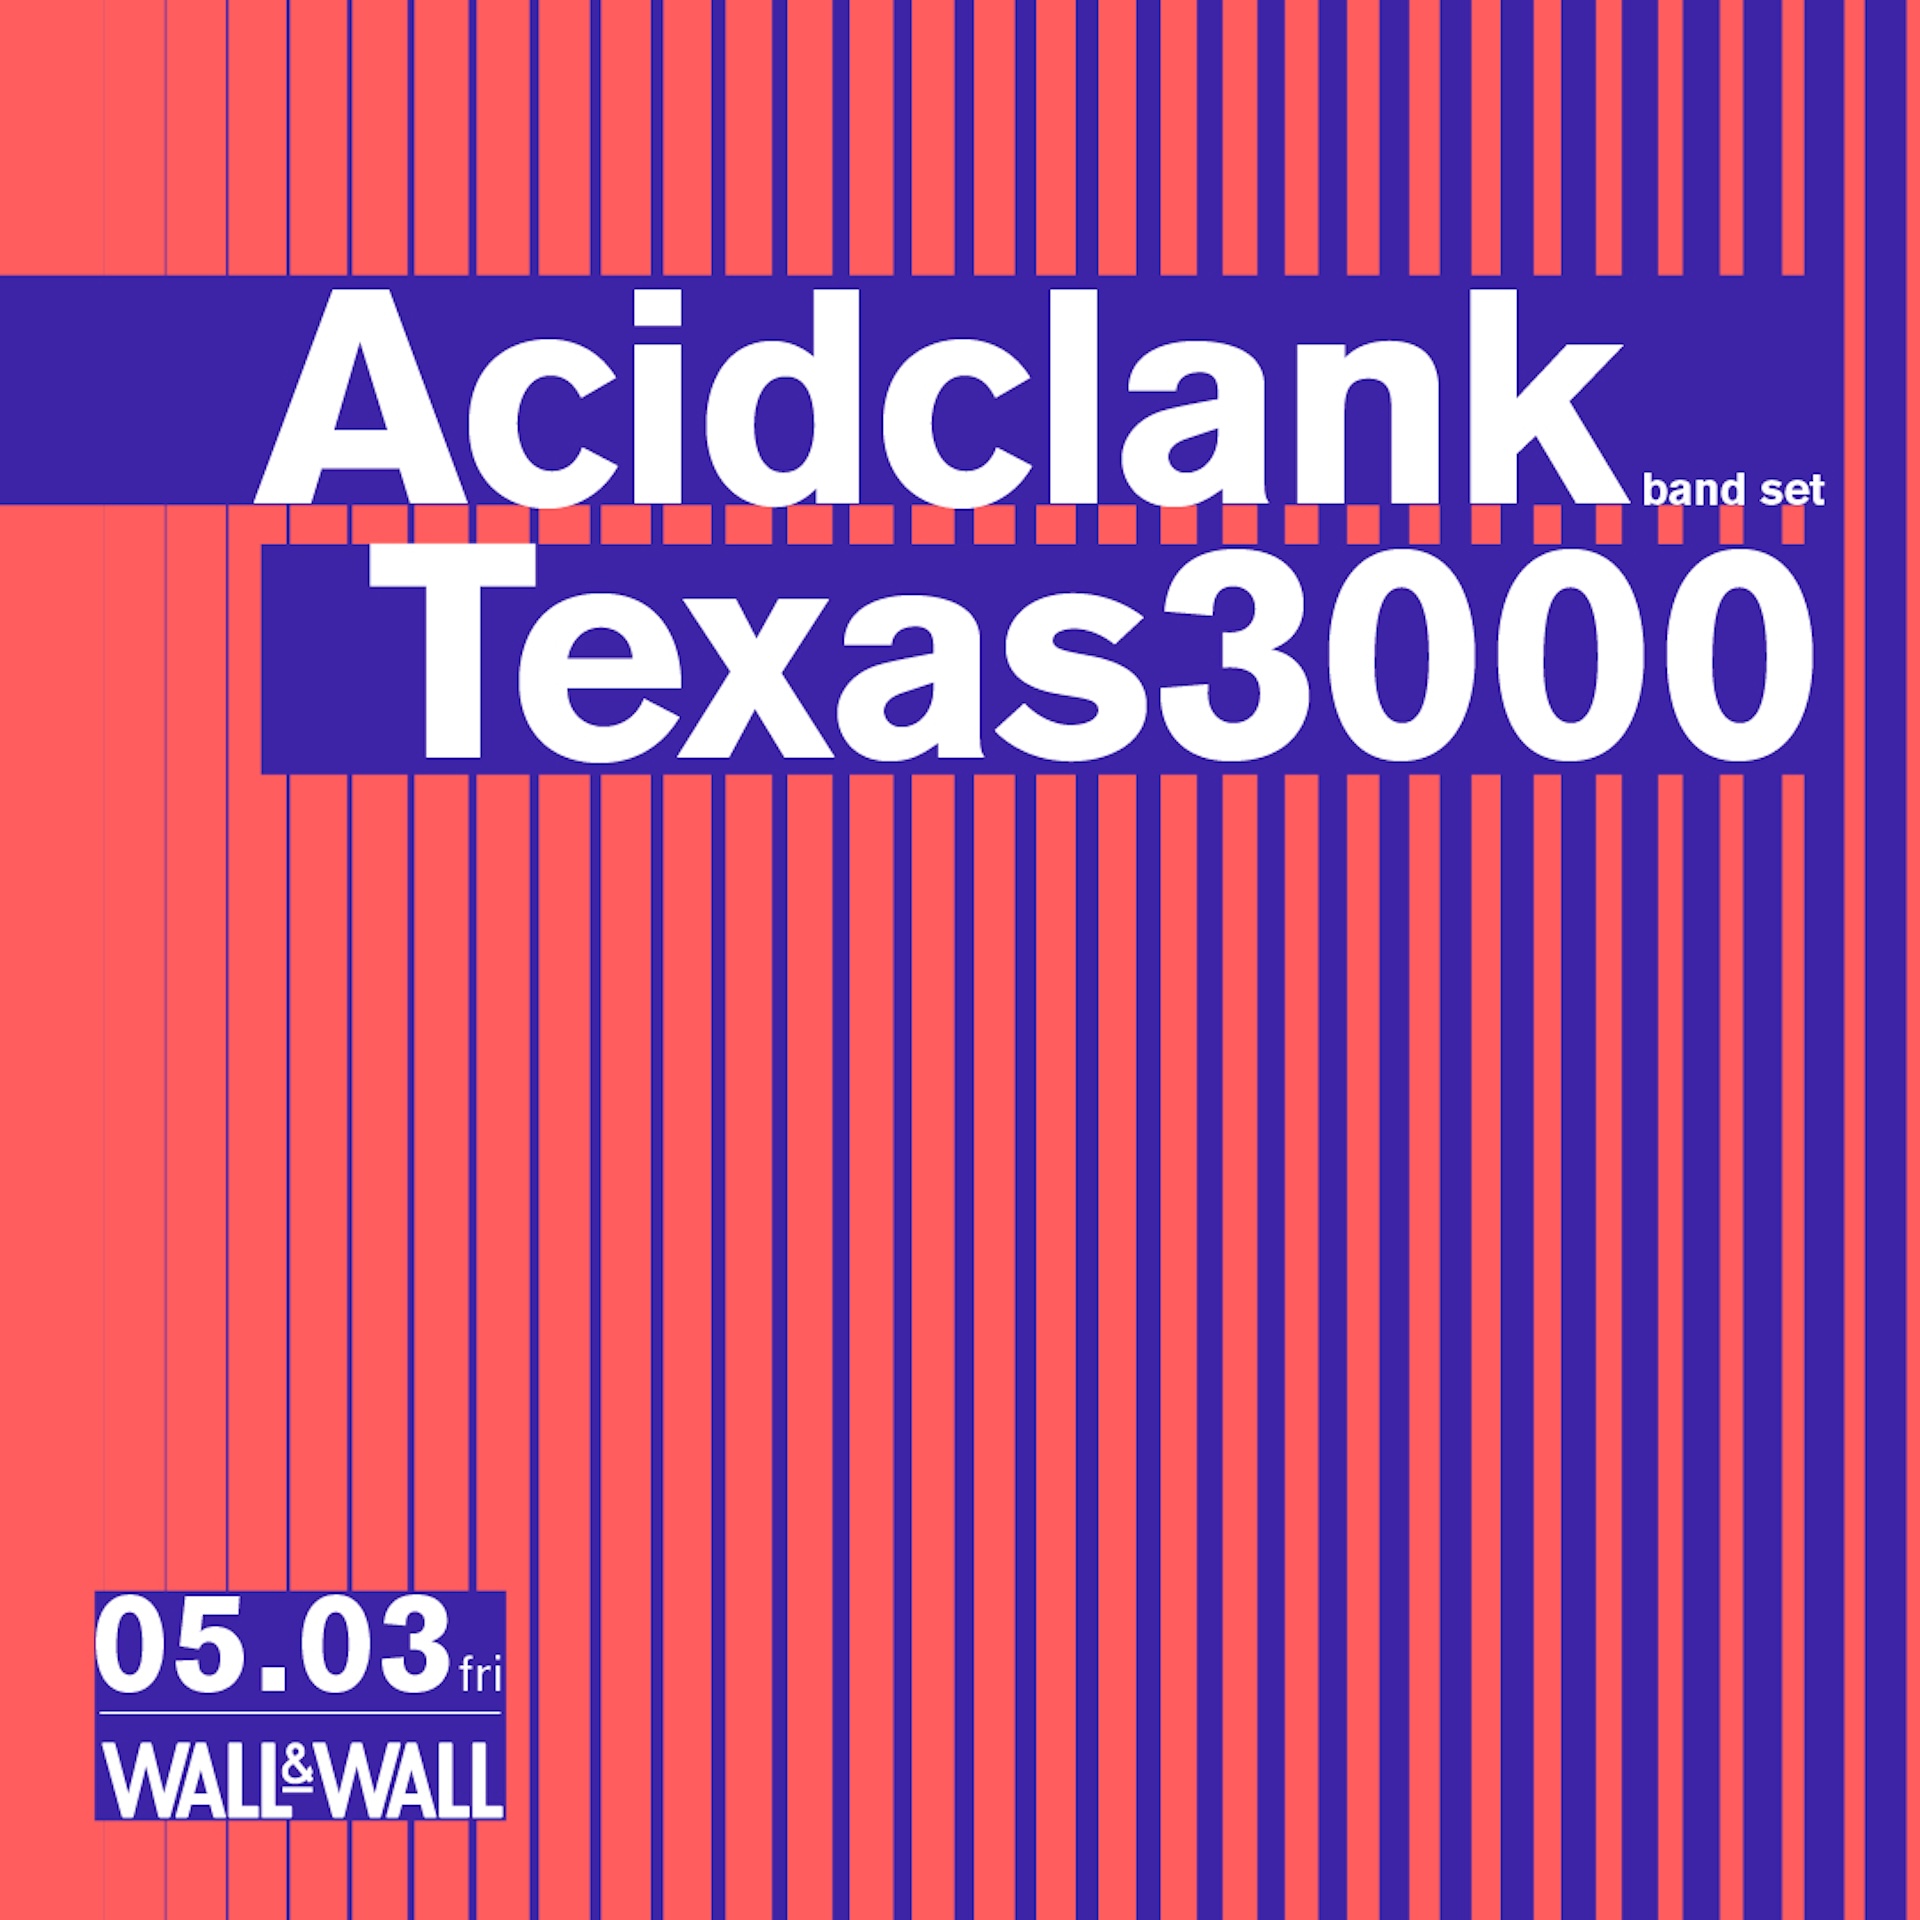 Acidclank（BAND SET）とTexas 3000が表参道・WALL&WALLで共演 music240415-acidclank-texas30002